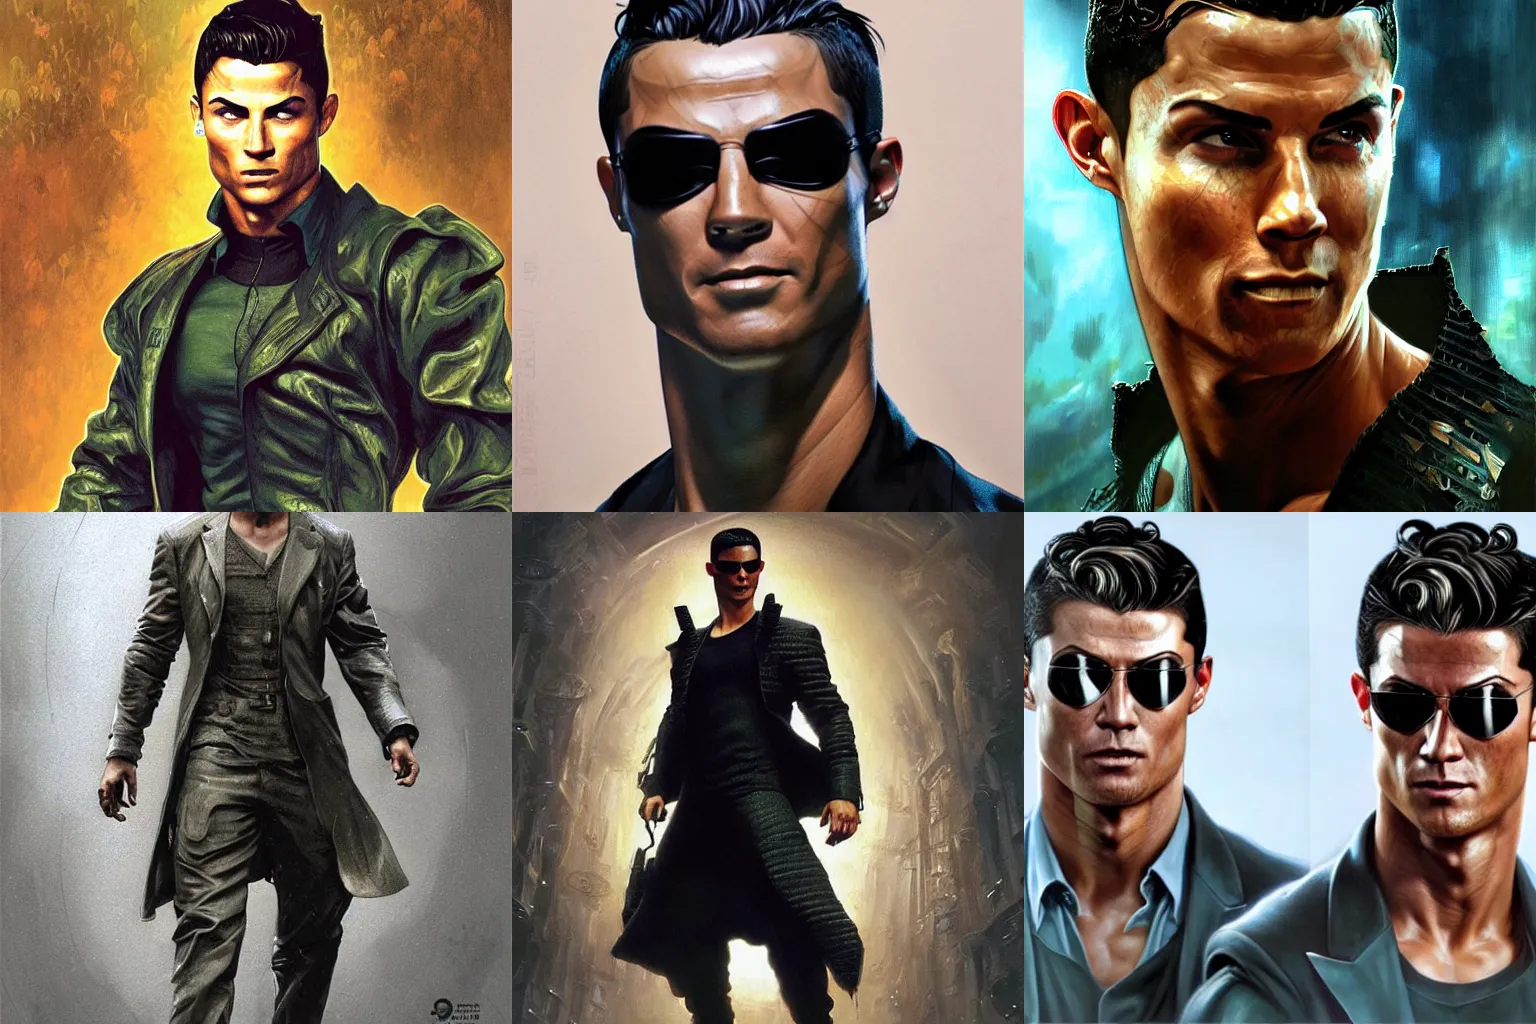 Cristiano Ronaldo edit - Intersteller main- 4k edit (#ronaldo